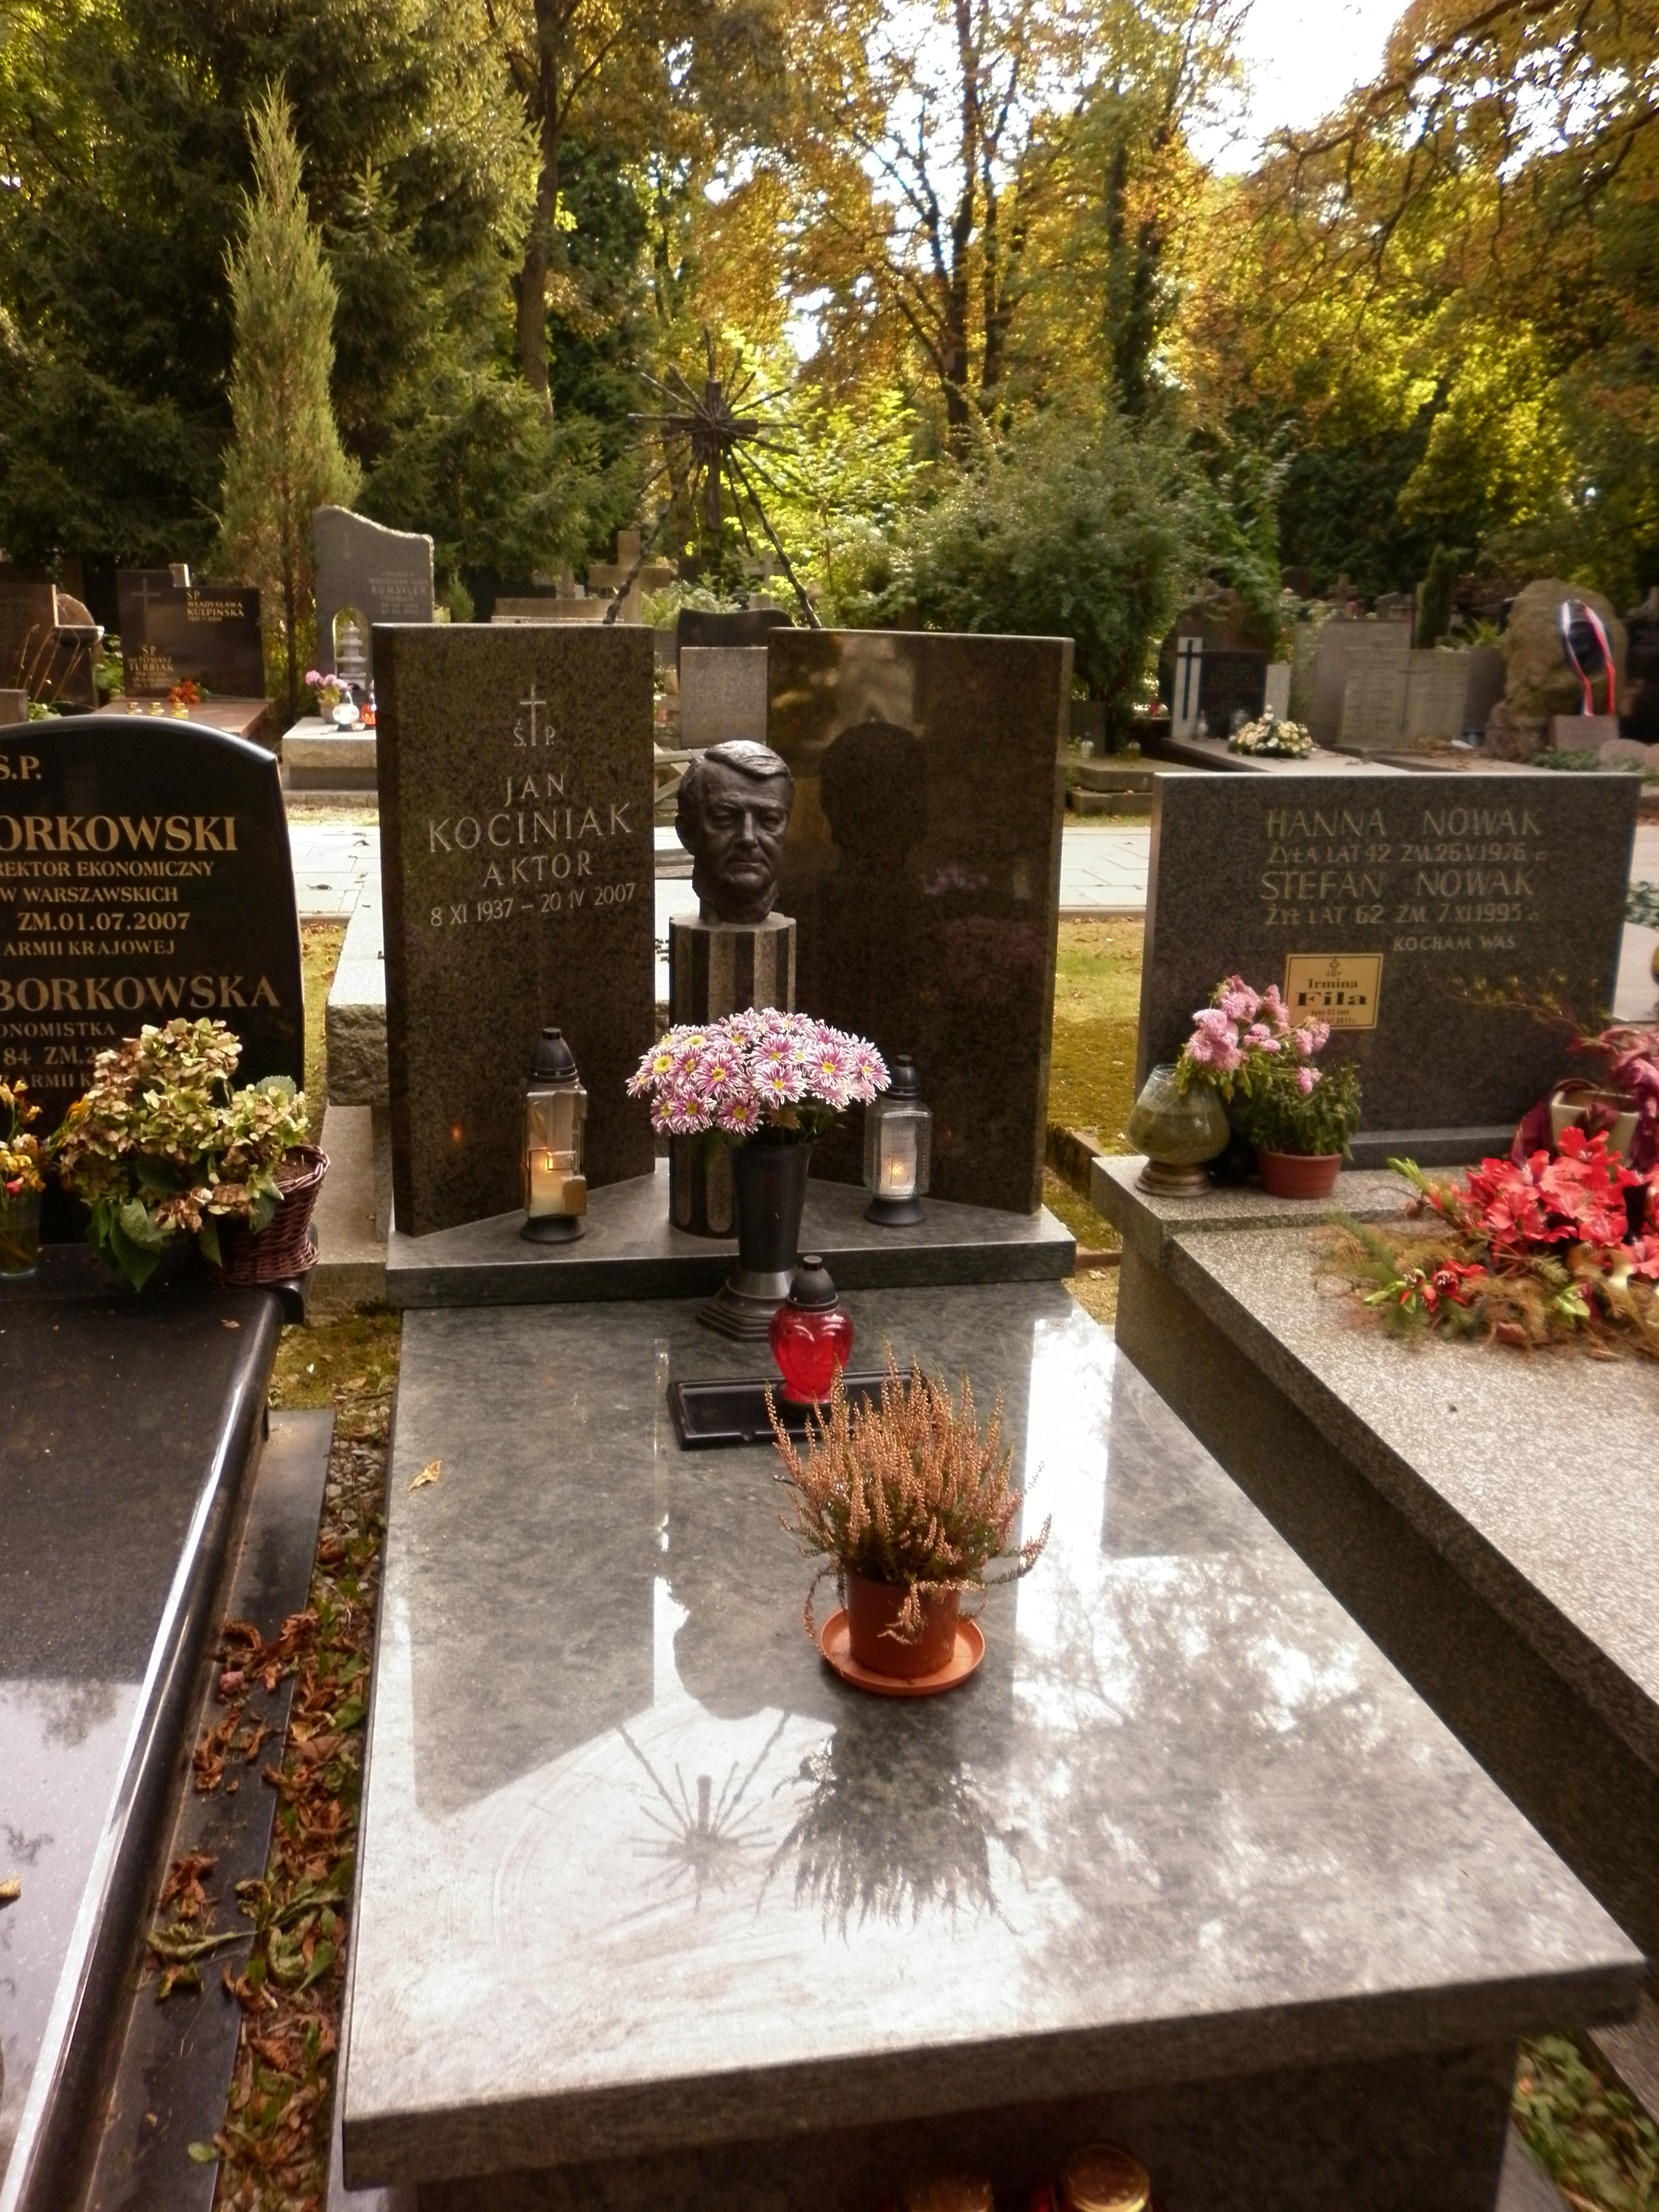 Wikipedia, Jan Kociniak, Self-published work, Warsaw Military Cemetery - K